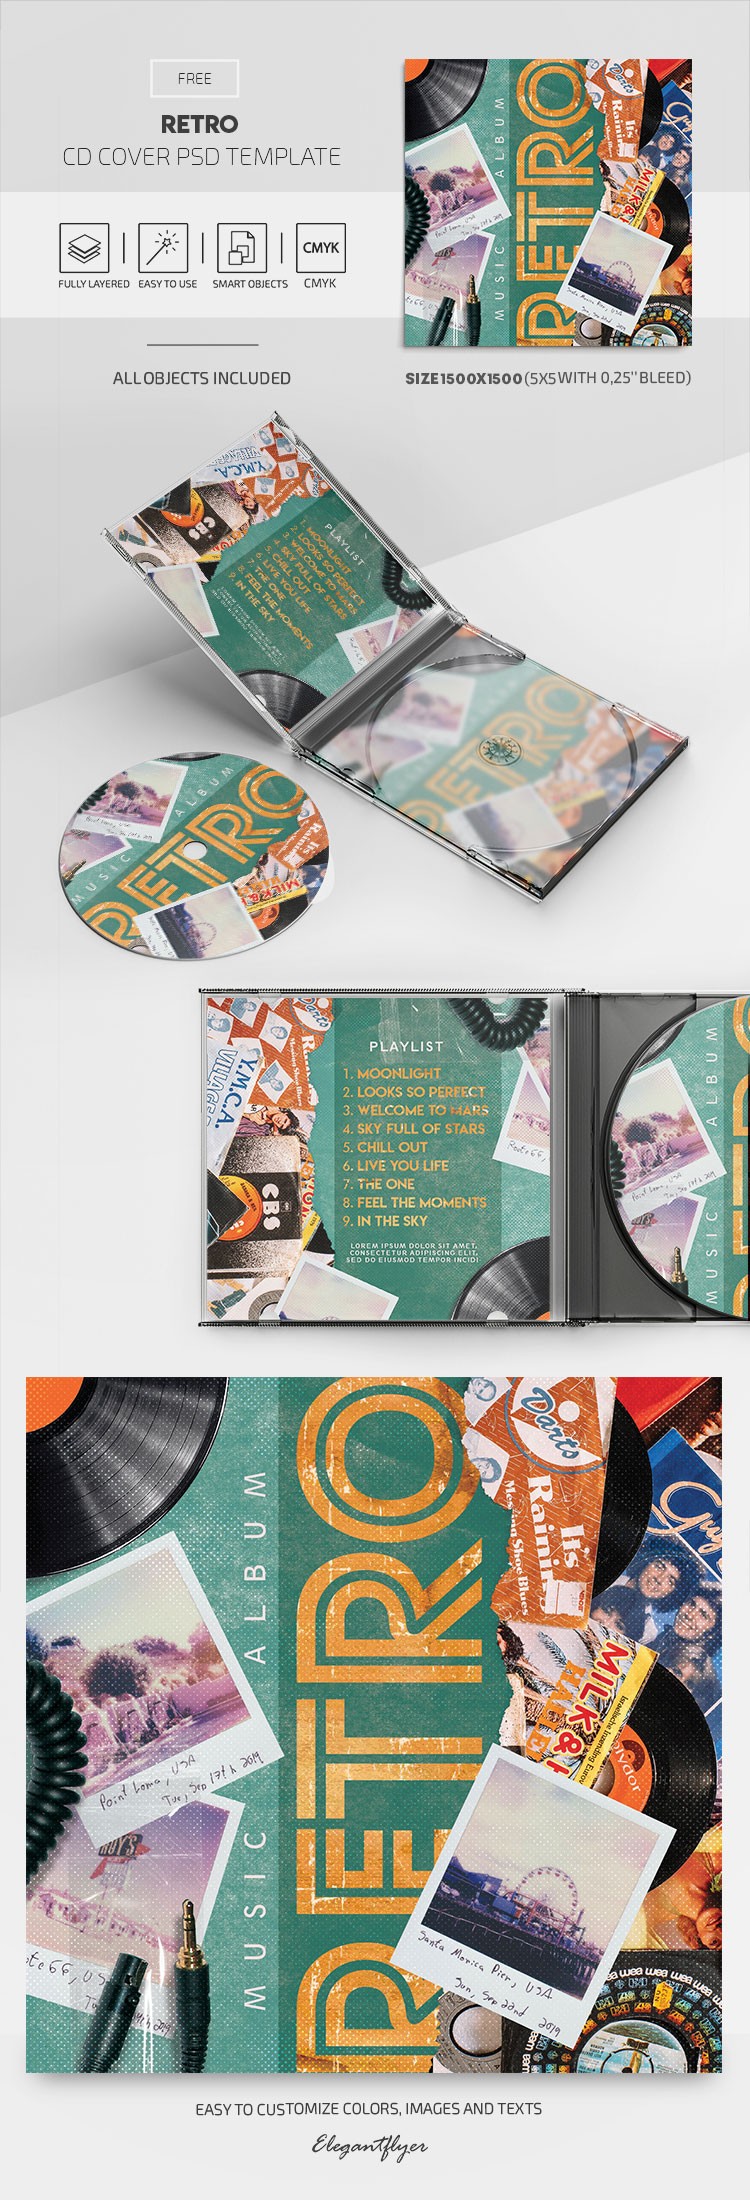 Copertina CD retrò by ElegantFlyer